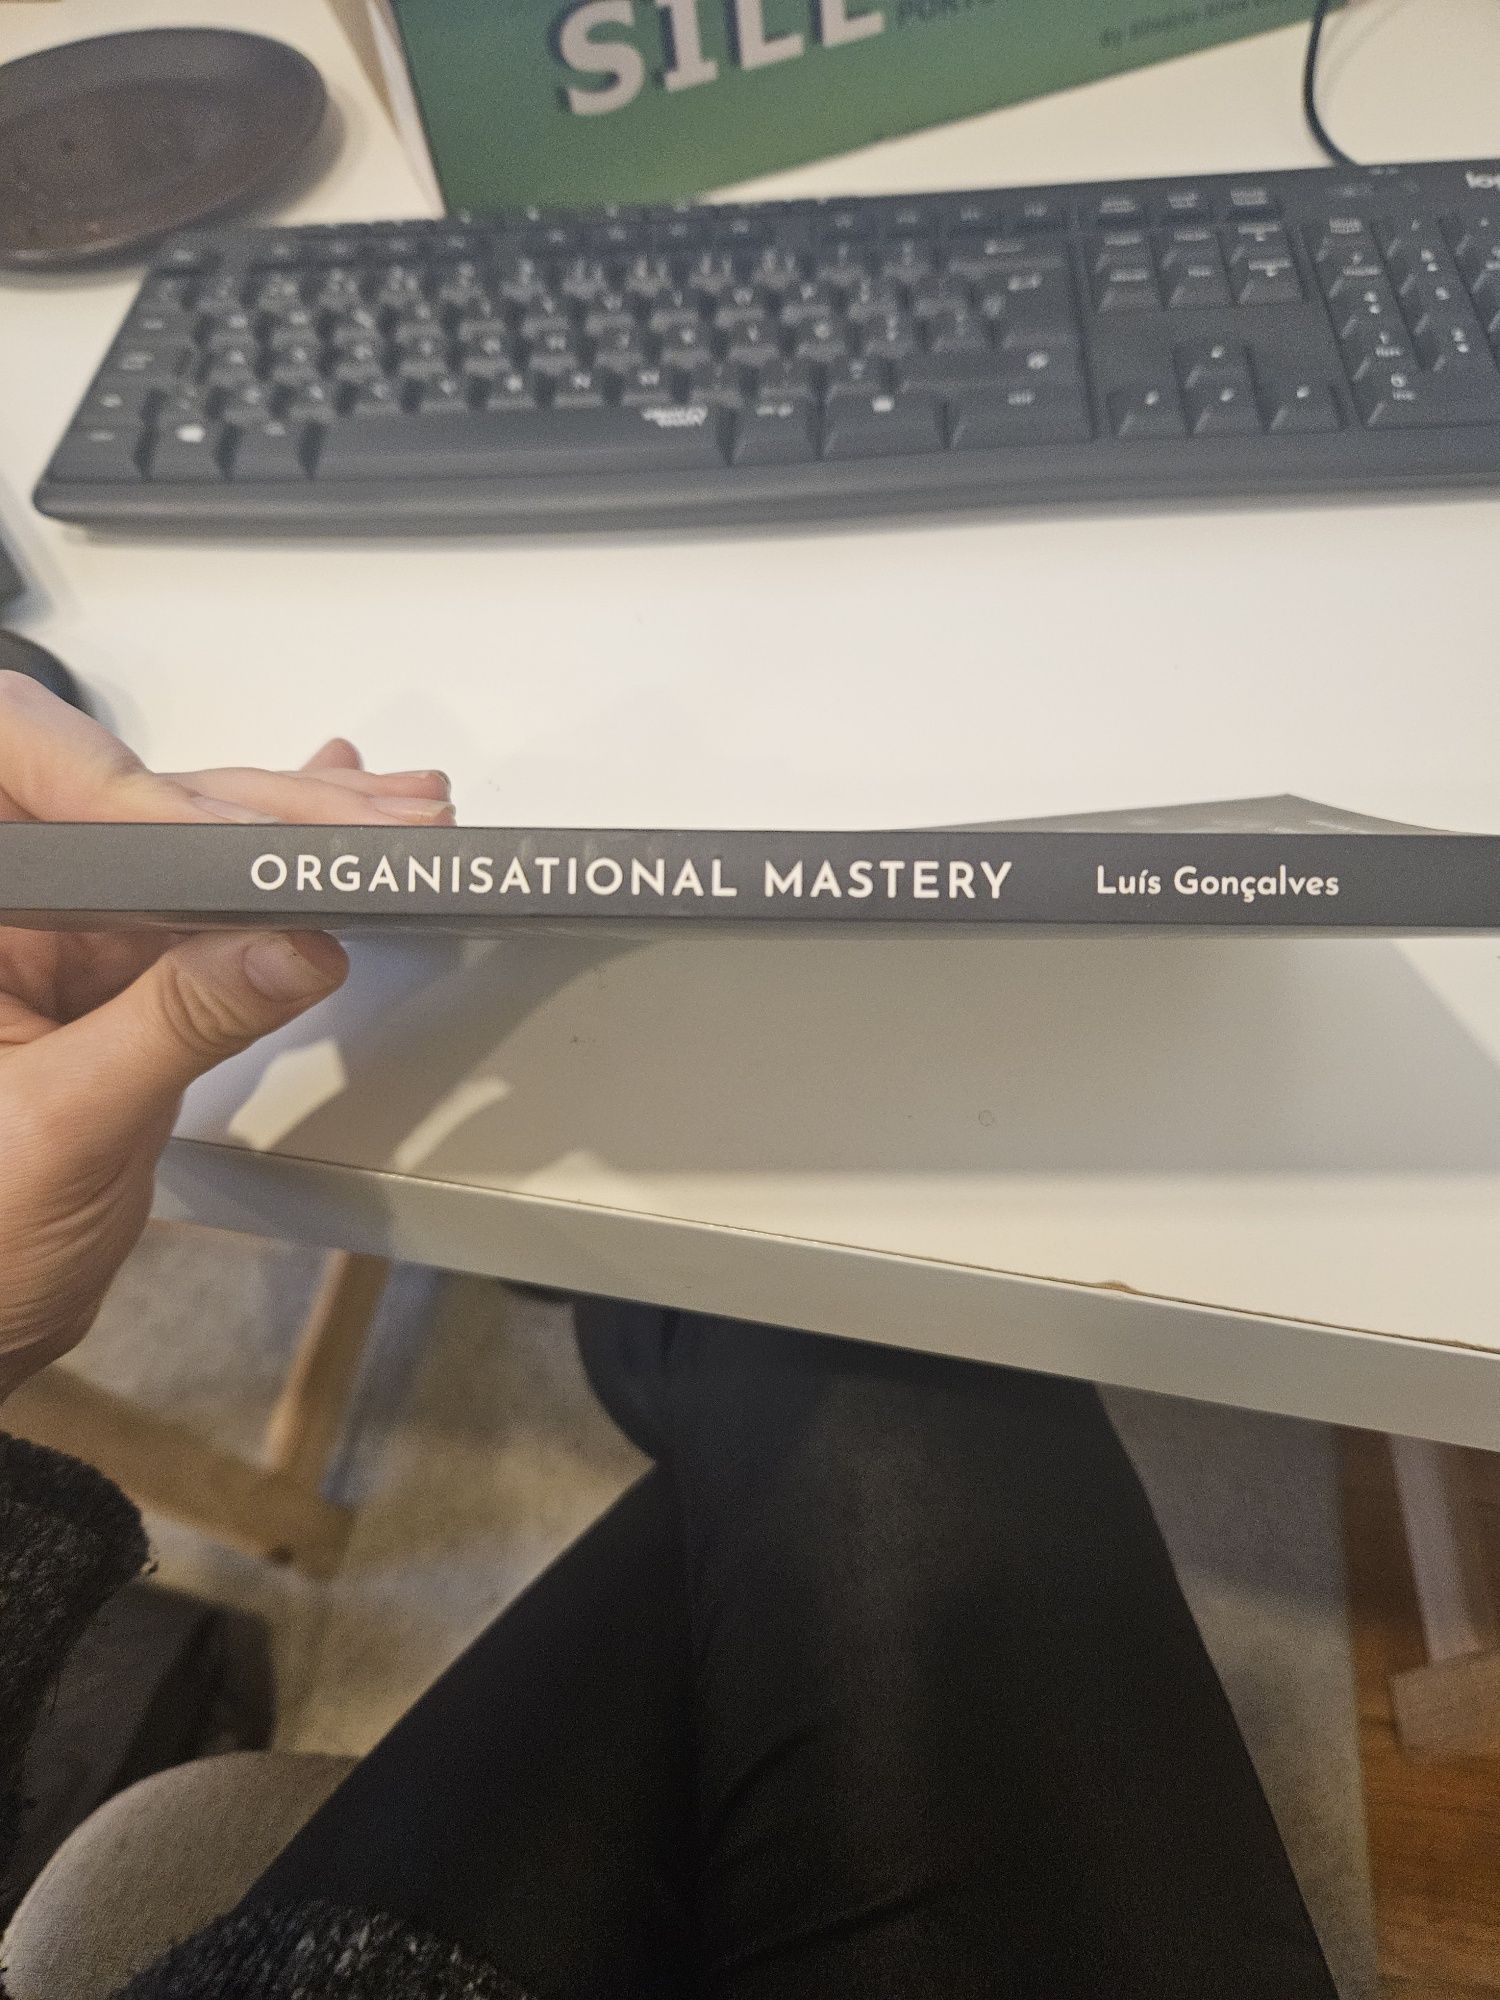 Livro "Organisational mastery"